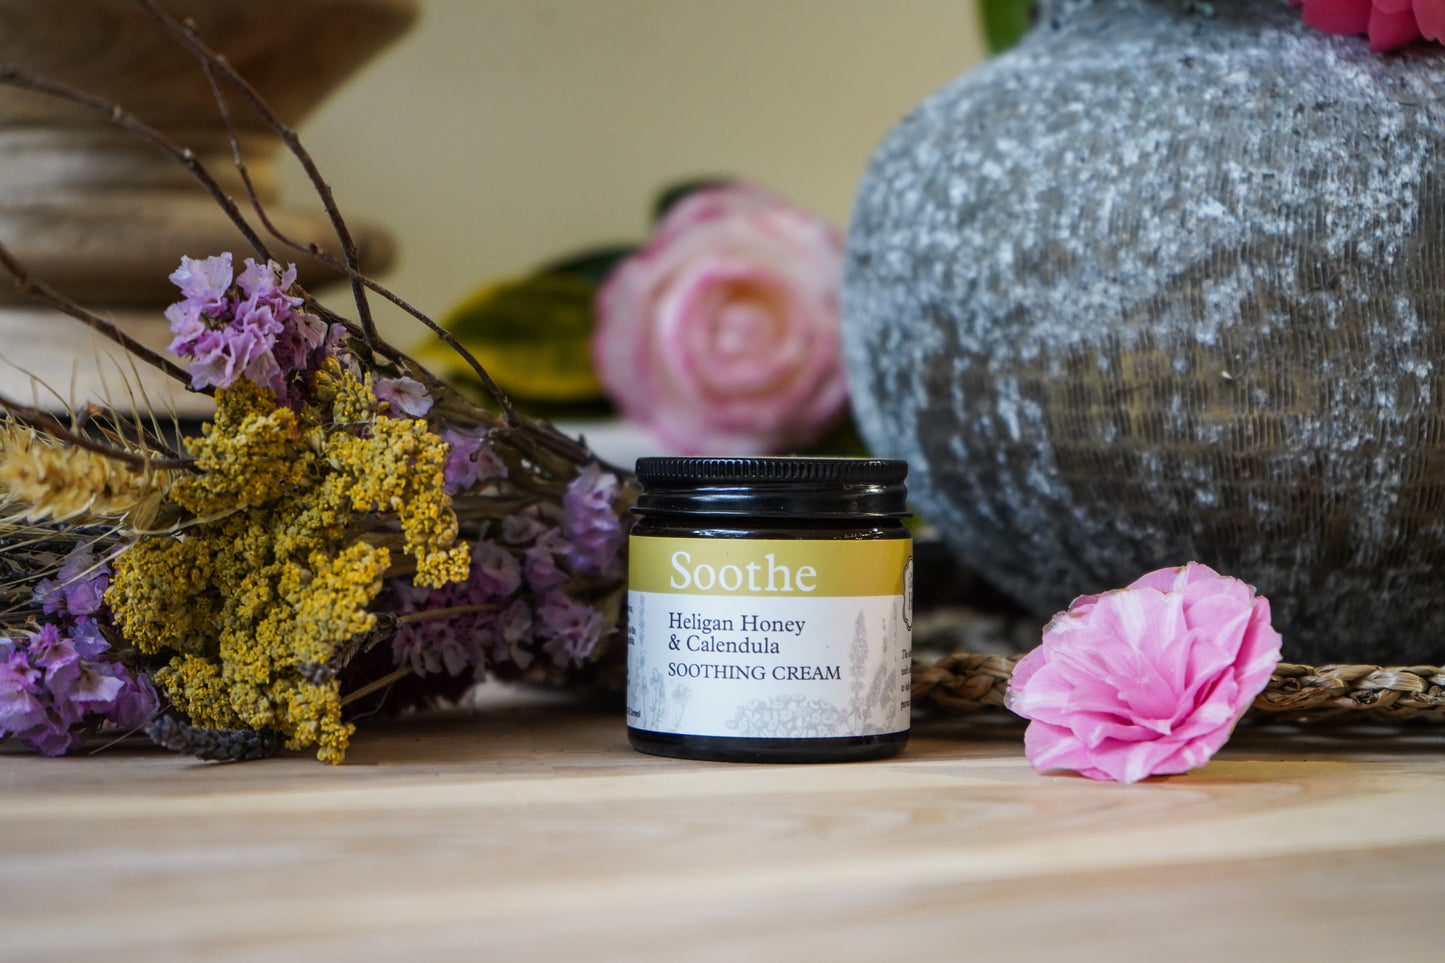 Soothe: Heligan Honey and Calendula Soothing Cream